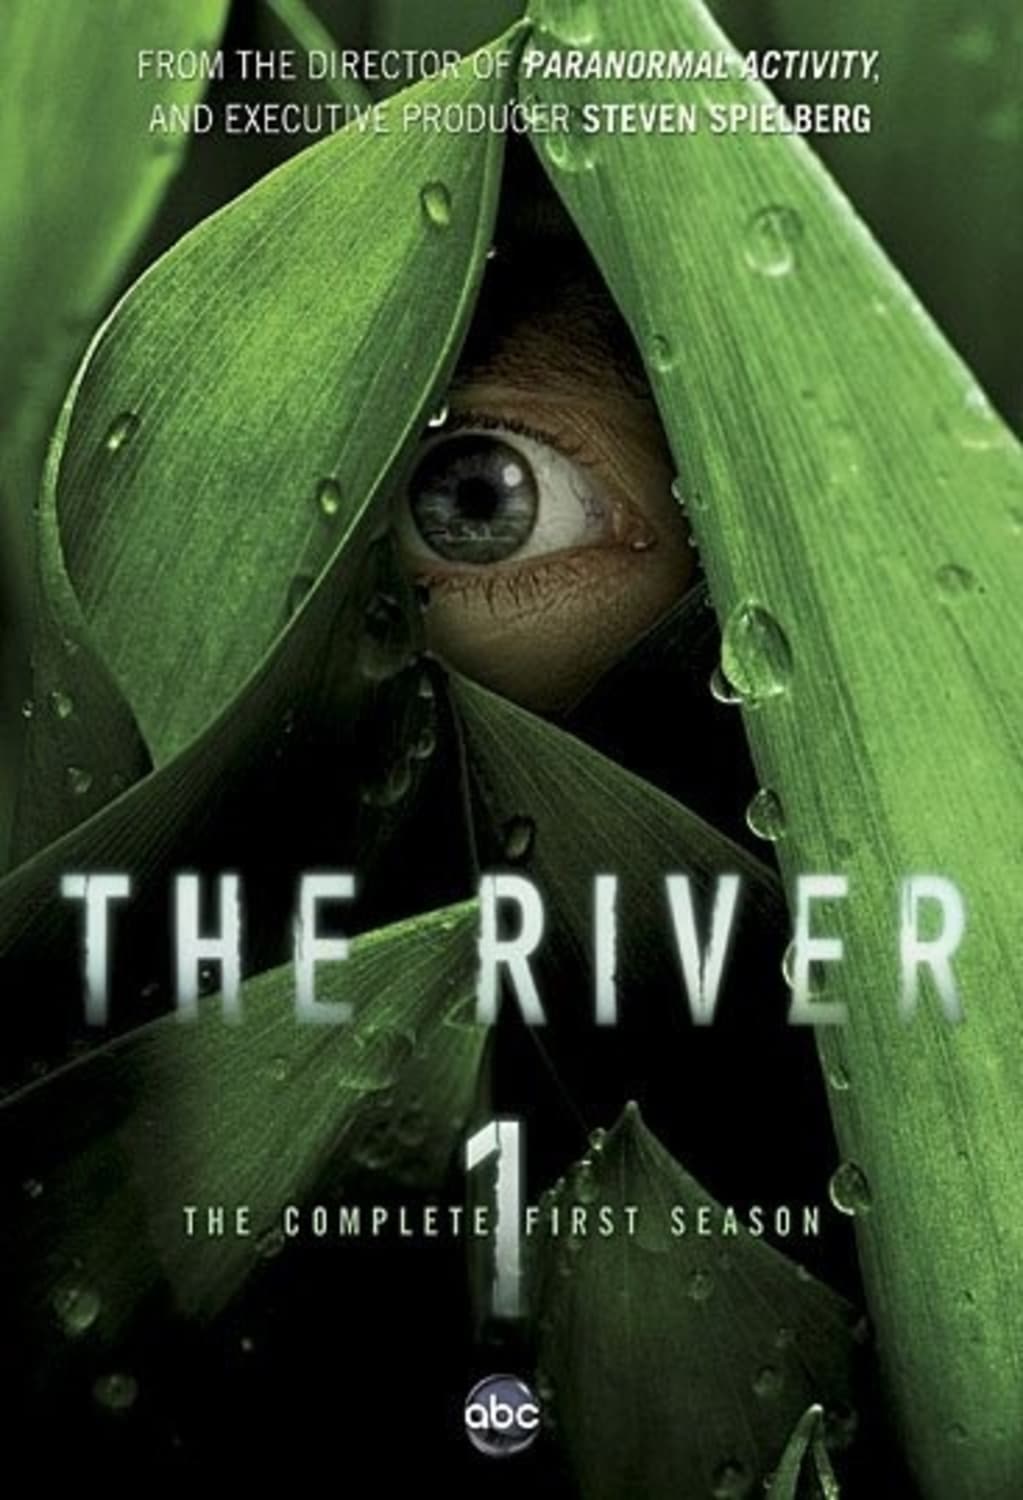 The River – Season 1 (DVD) on MovieShack